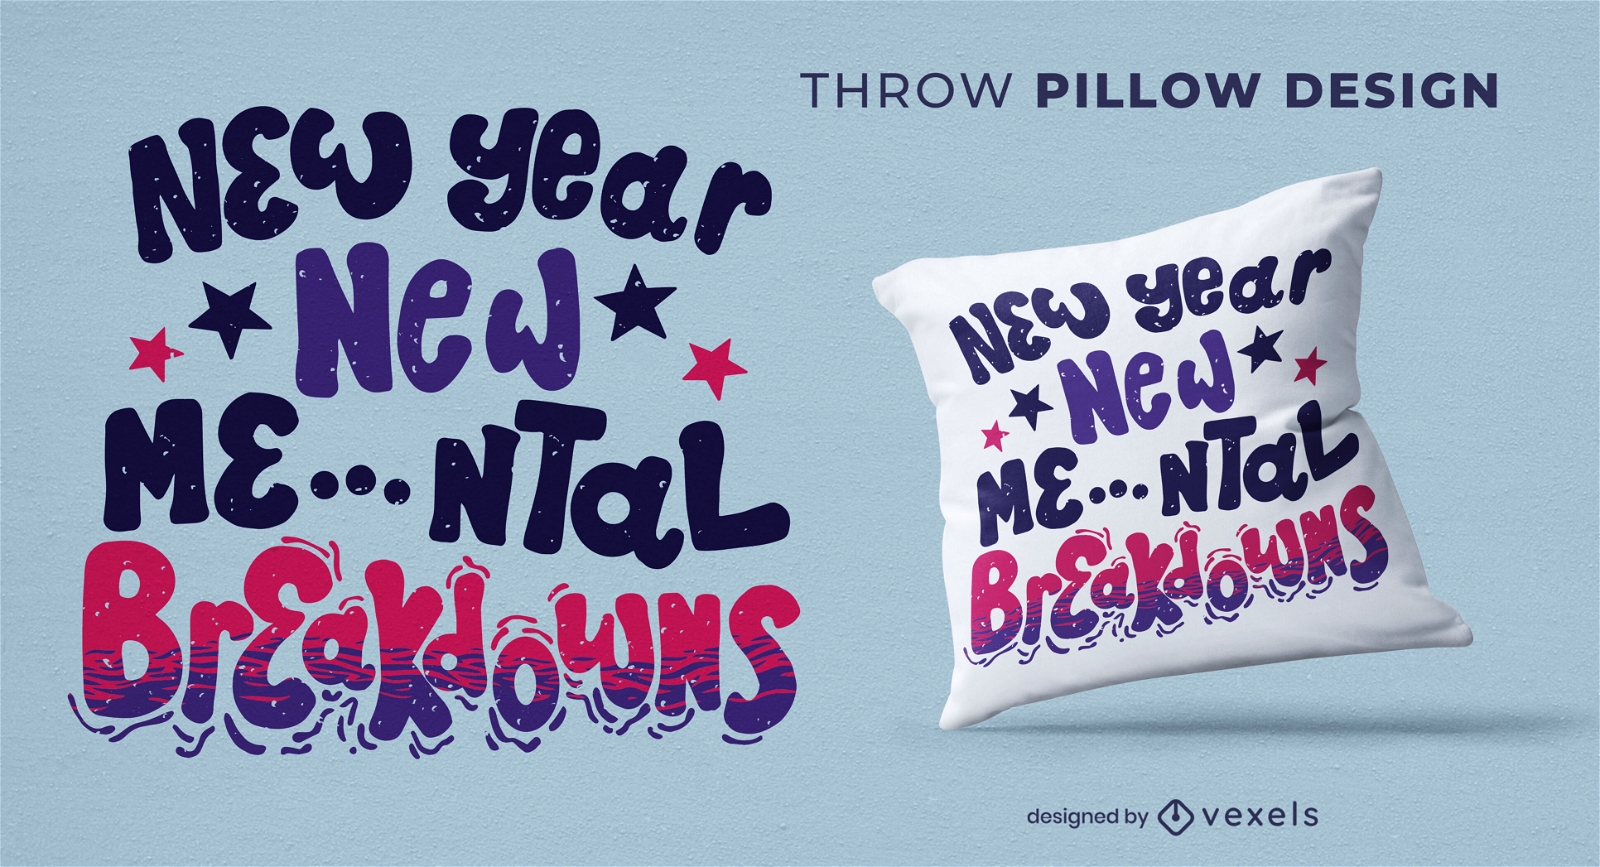 Anti New Year throw pillow design